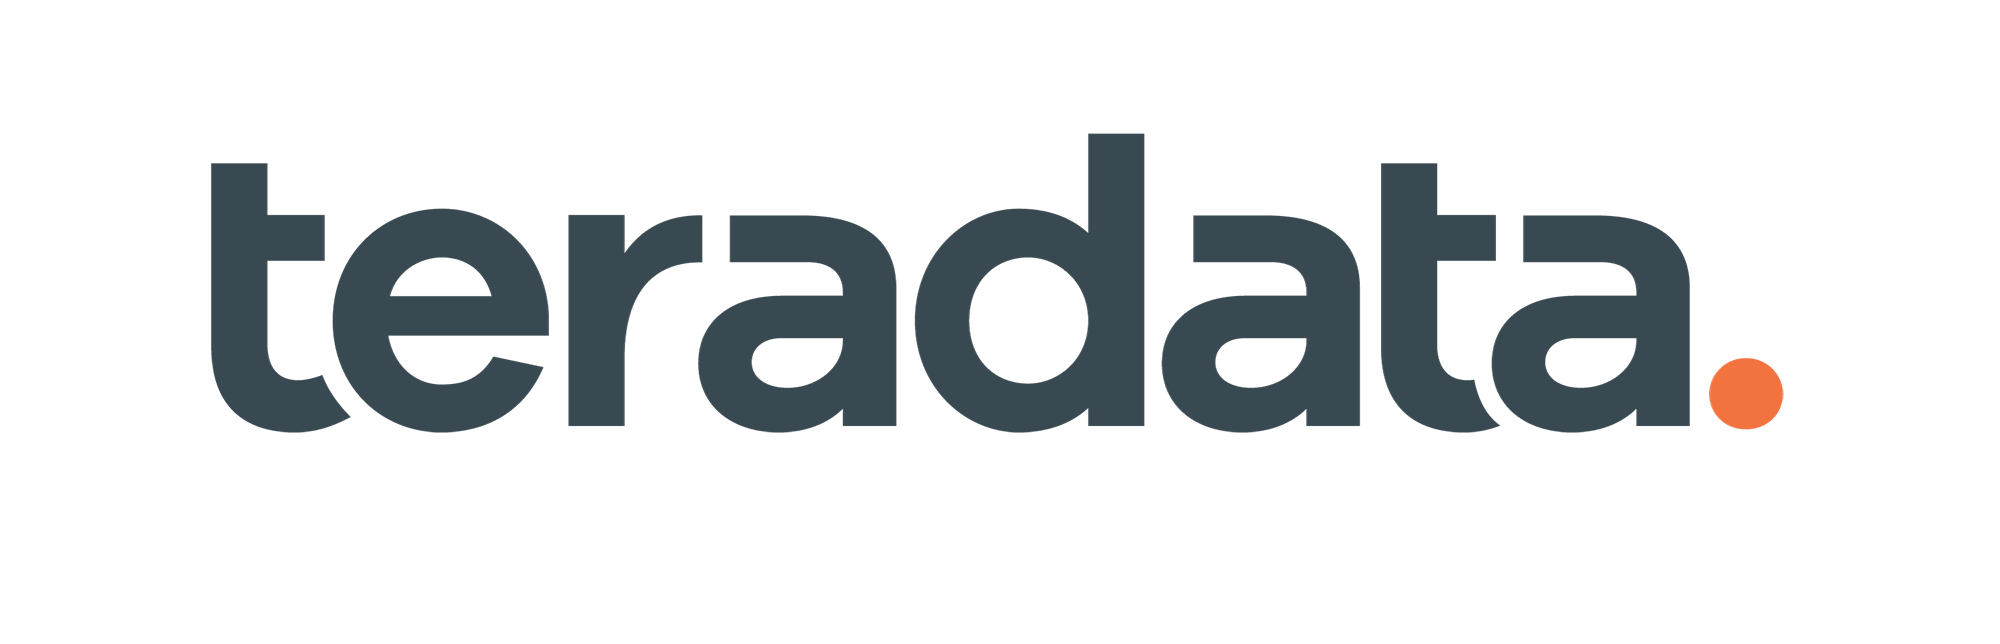 Teradata_logo_2018